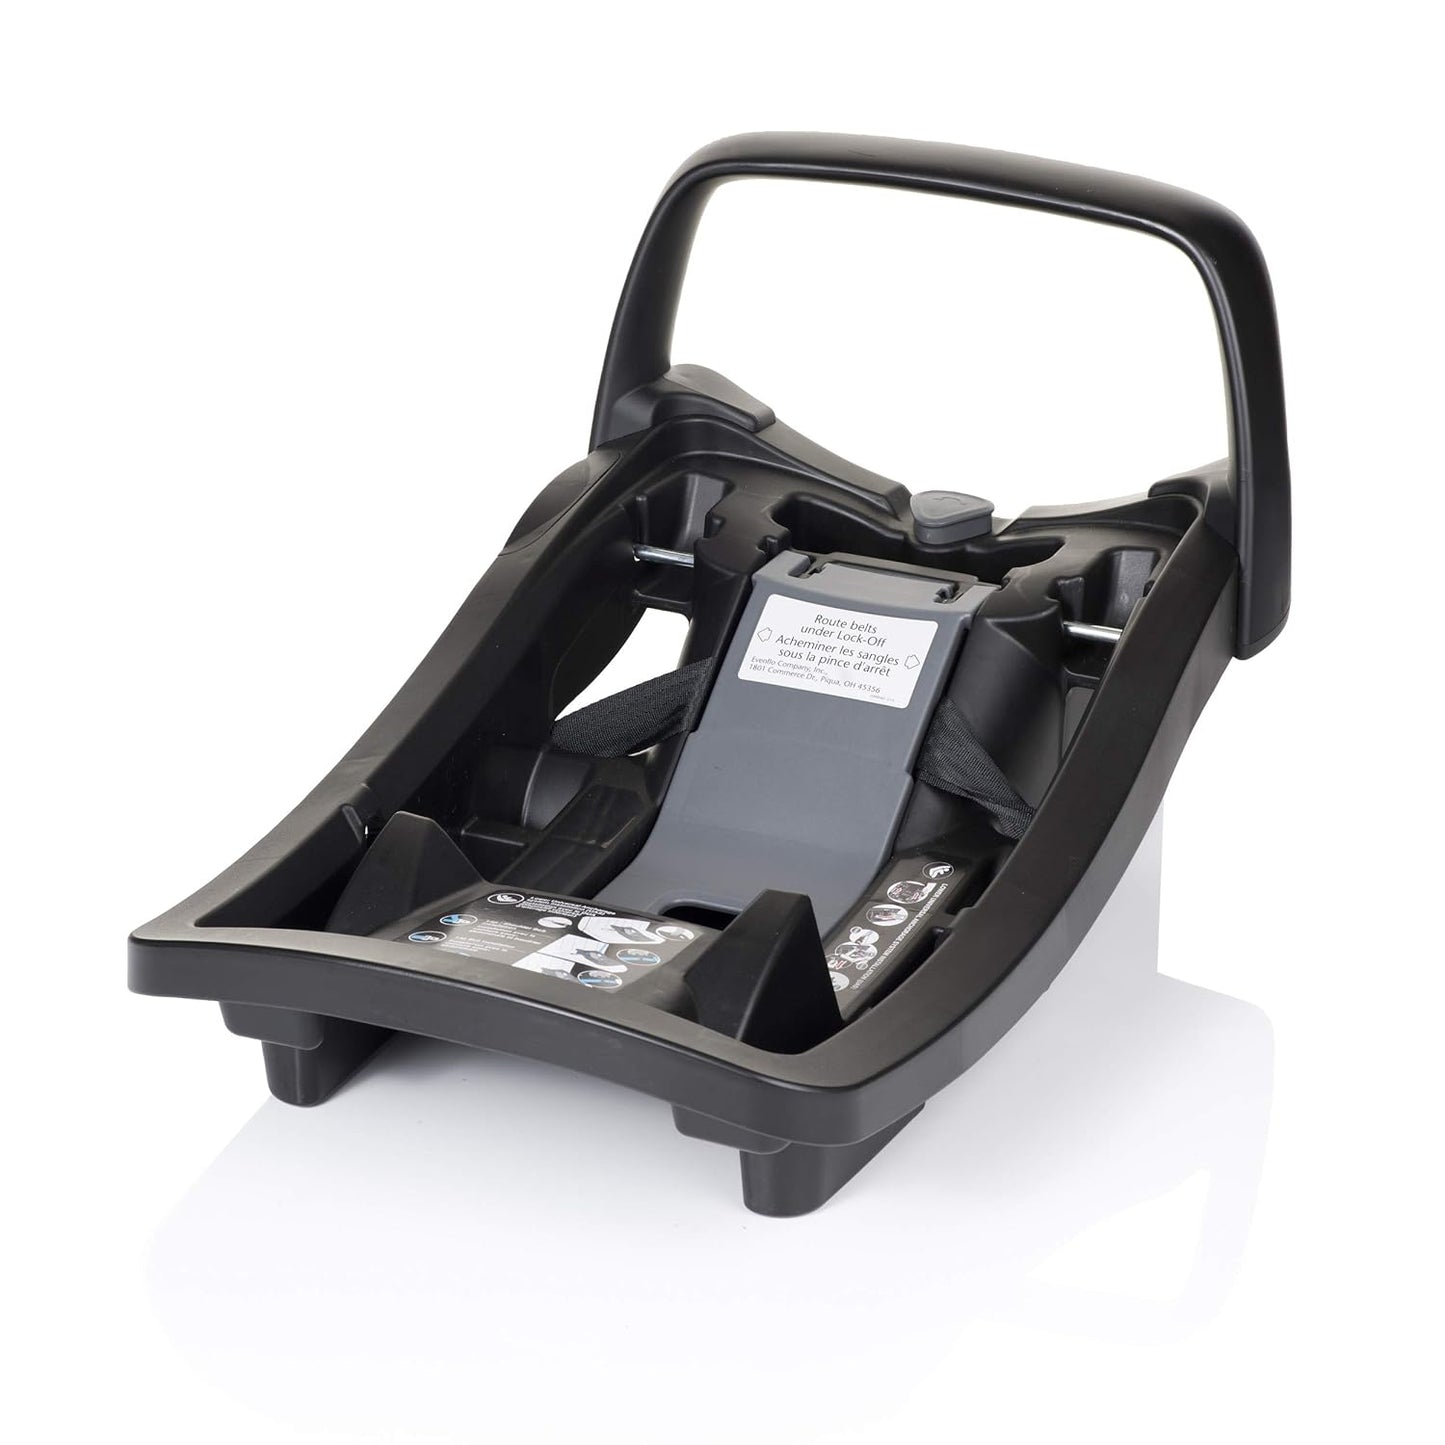 New Evenflo Pivot Suite Modular Travel System with LiteMax Infant Car Seat (Devon Gray)